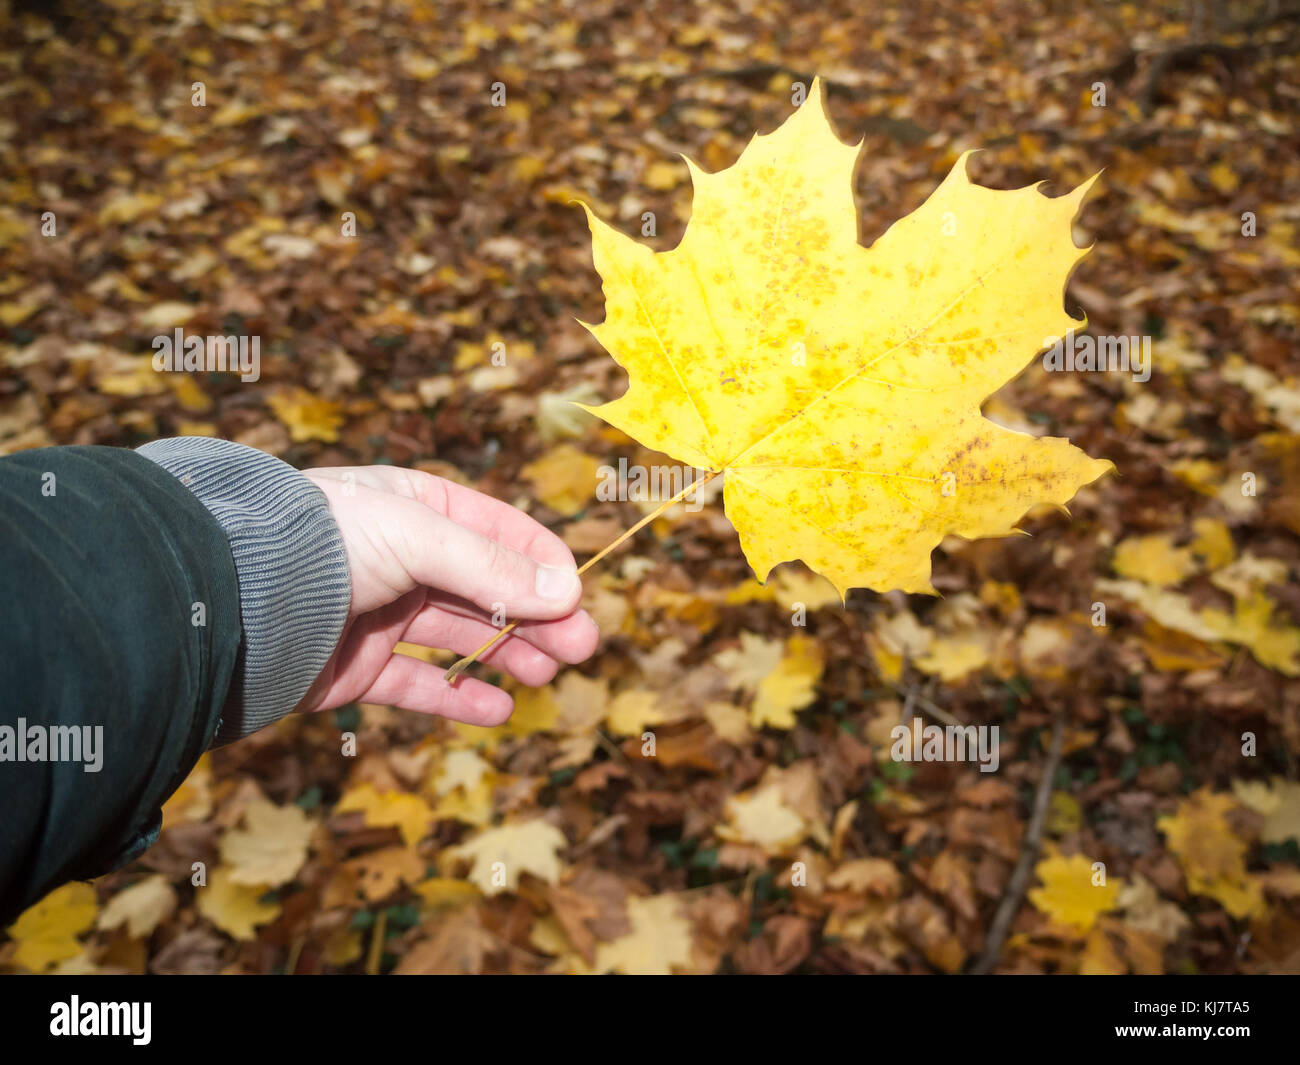 Main tendue devant tenir une Golden Orange Jaune automne feuille d'automne la nature ; Essex ; Angleterre ; uk Banque D'Images